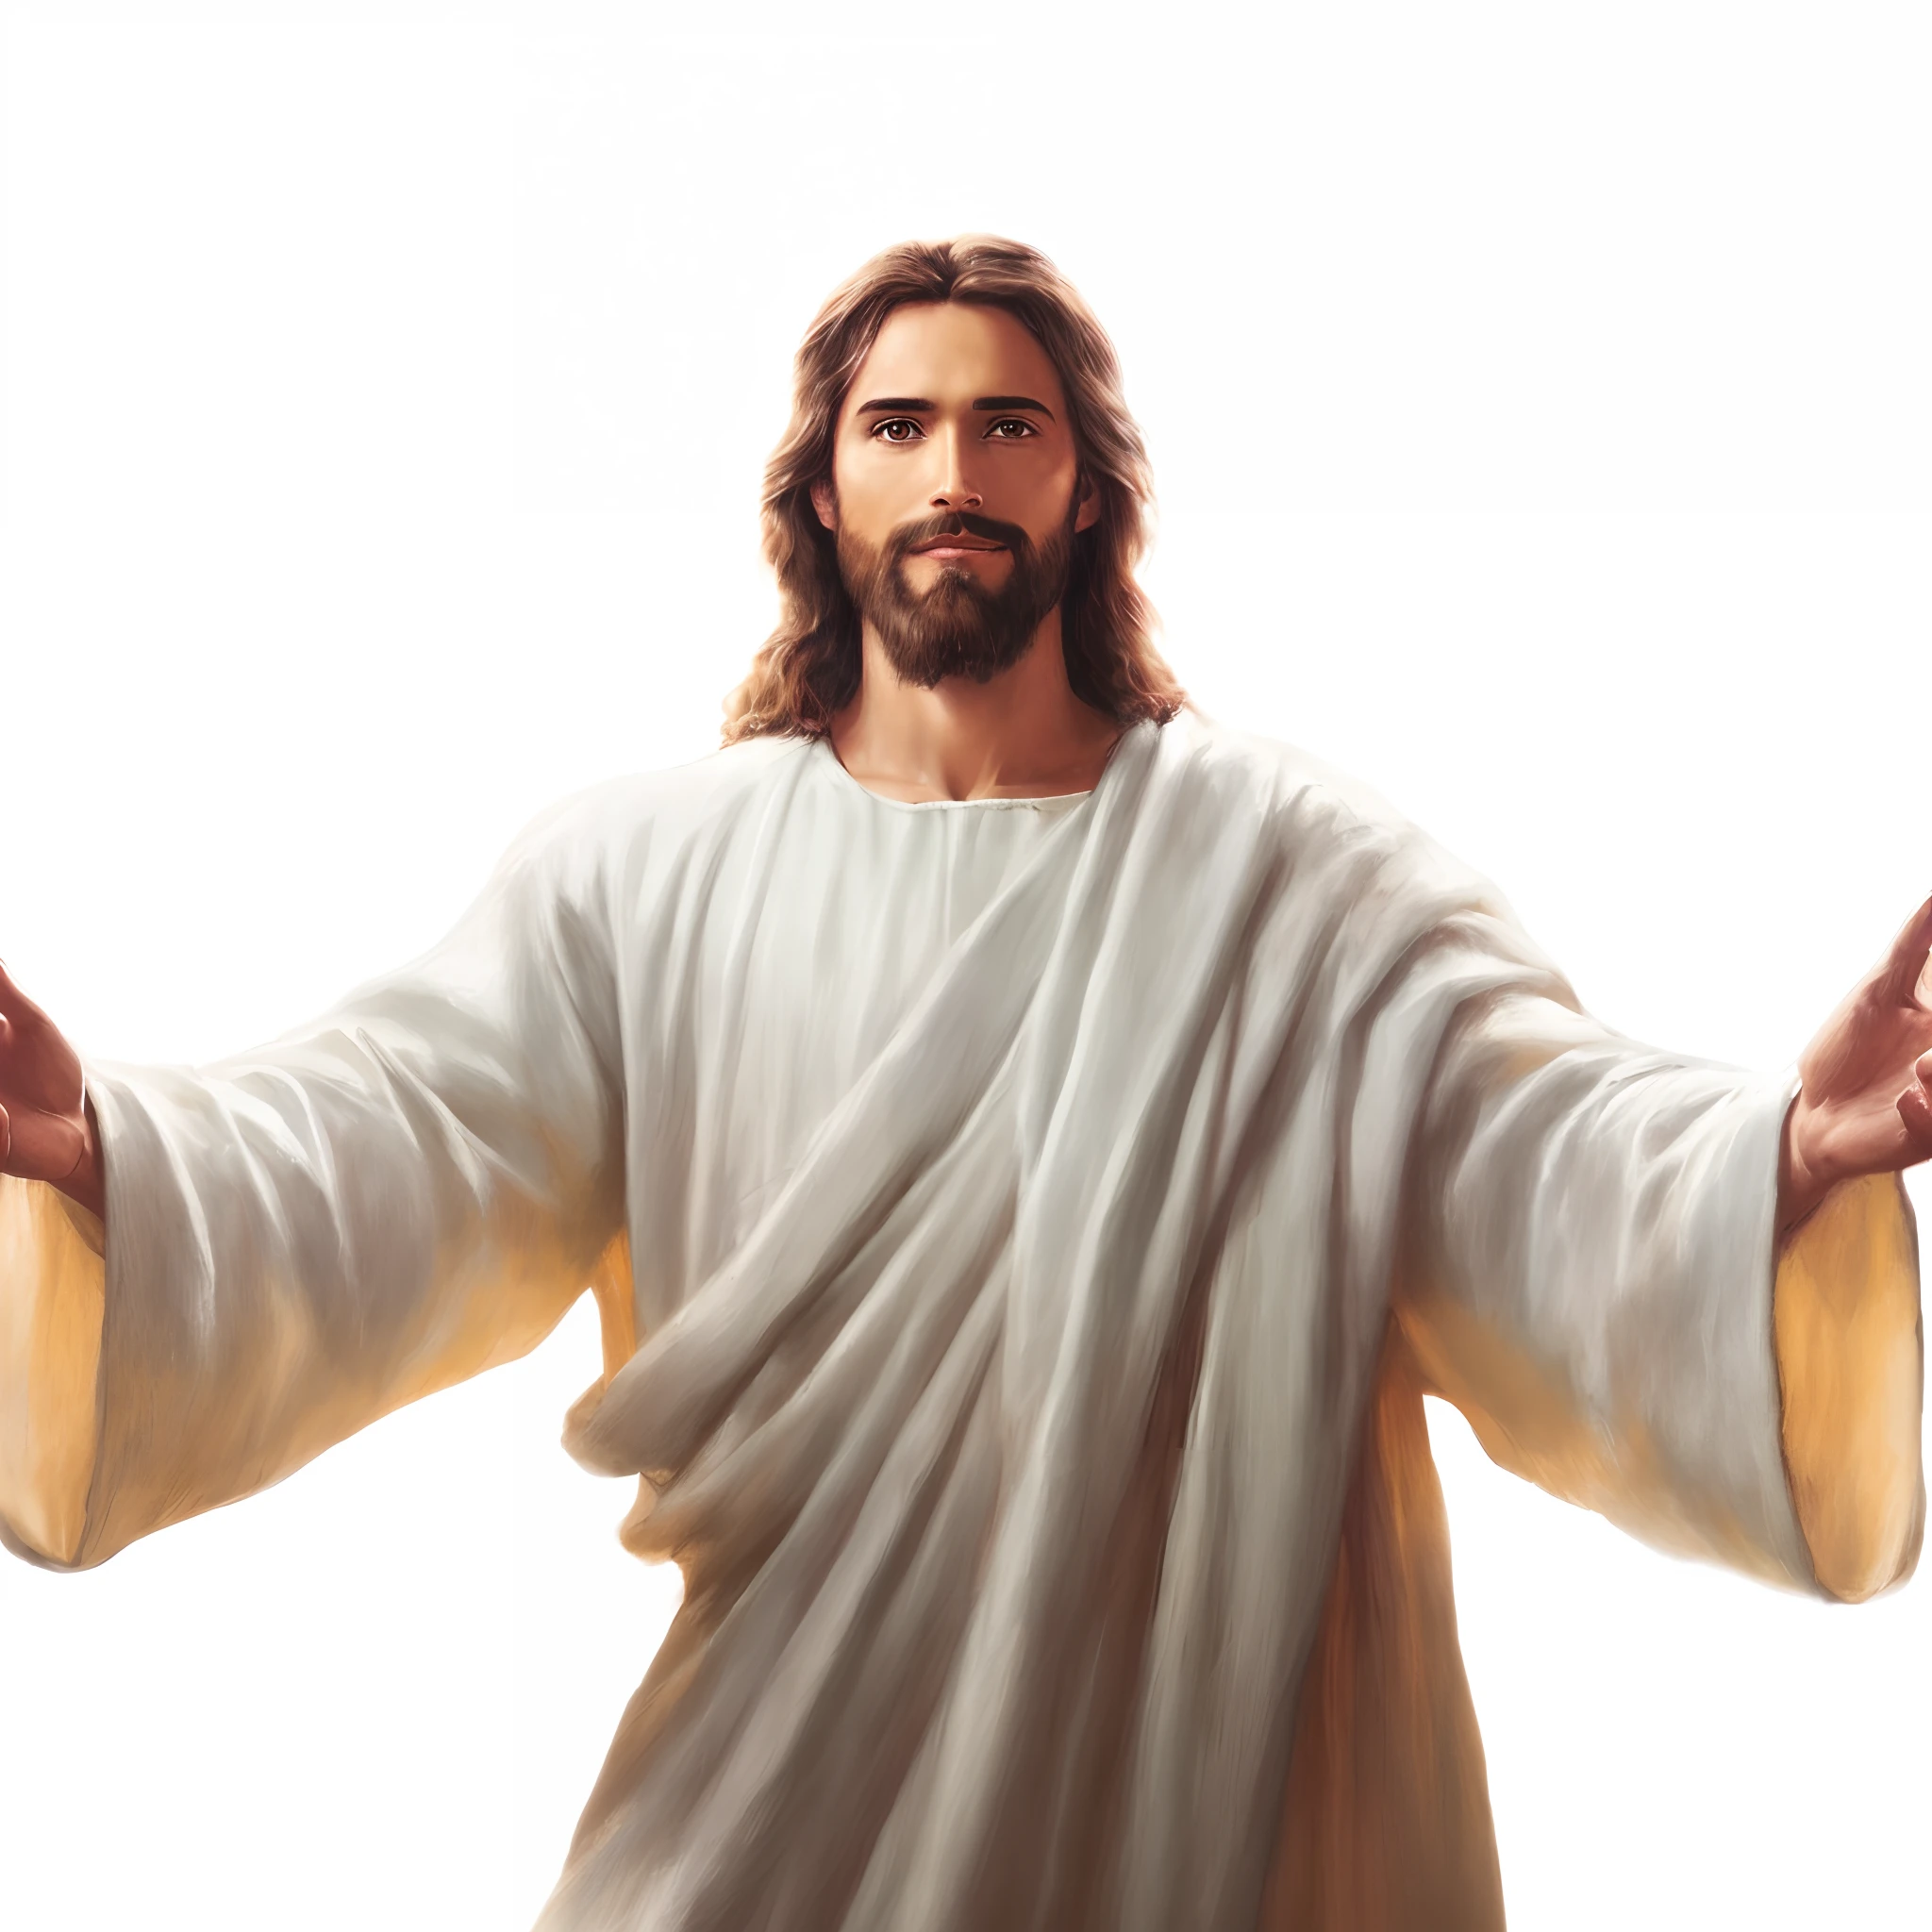 A closeup of イエス with outstretched arms, イエス Cristo, 彼はあなたを温かく迎えています, 彼は両腕を広げた, イエス, Vestido como イエス Cristo, Retrato de イエス Cristo, 主であり救い主, 全能の若き神, イエス Gigachad, 彼は両腕を広げた. 飛ぶ準備ができています, イエス Negro, rosto de イエス, ナザレのイエス